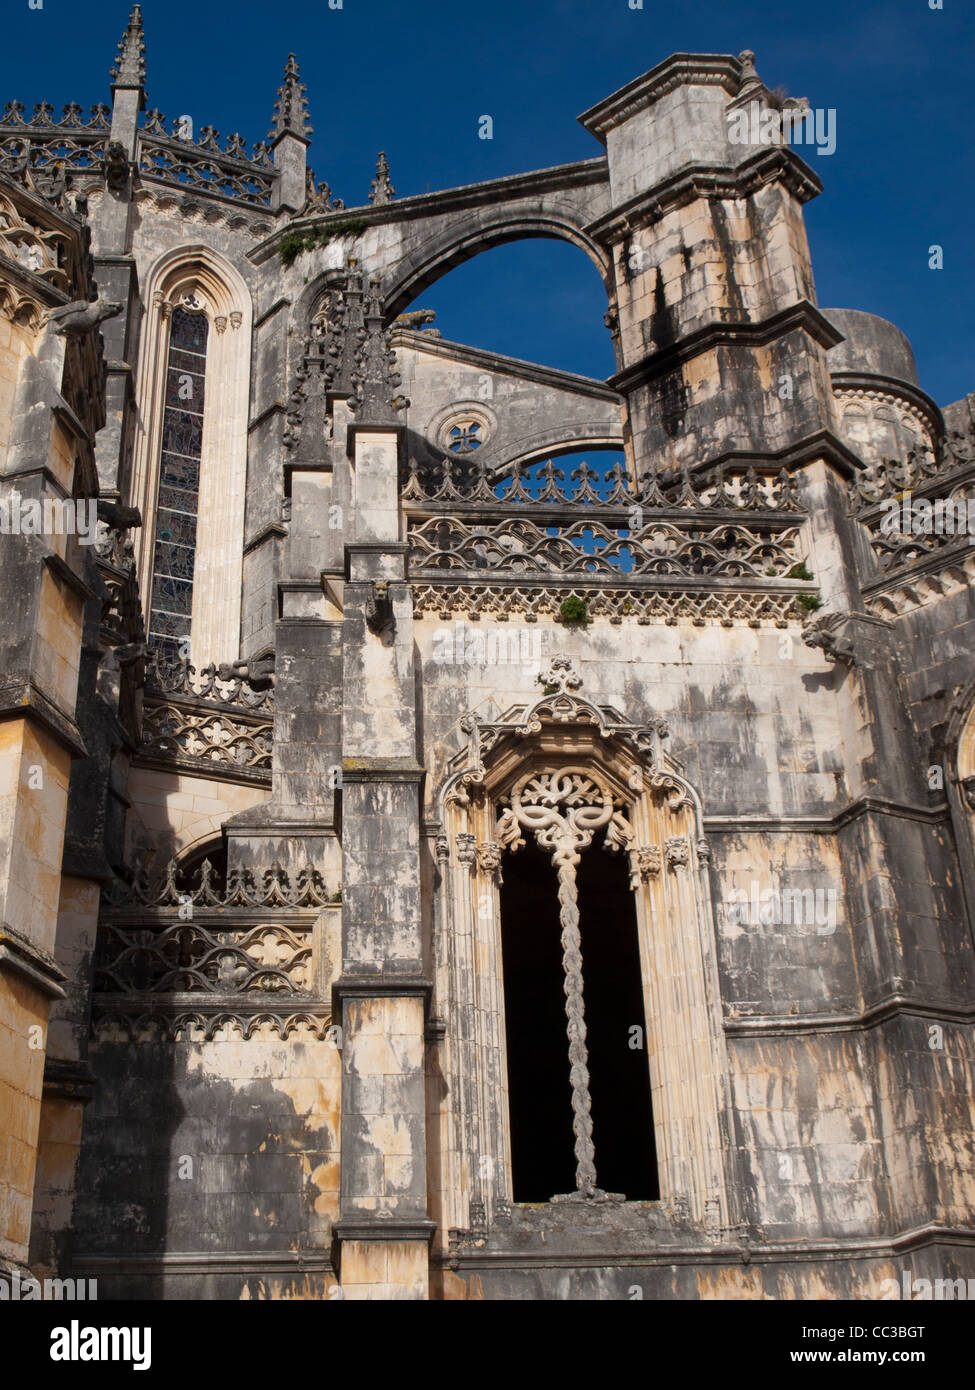 Batalha Monastery facade details Stock Photo